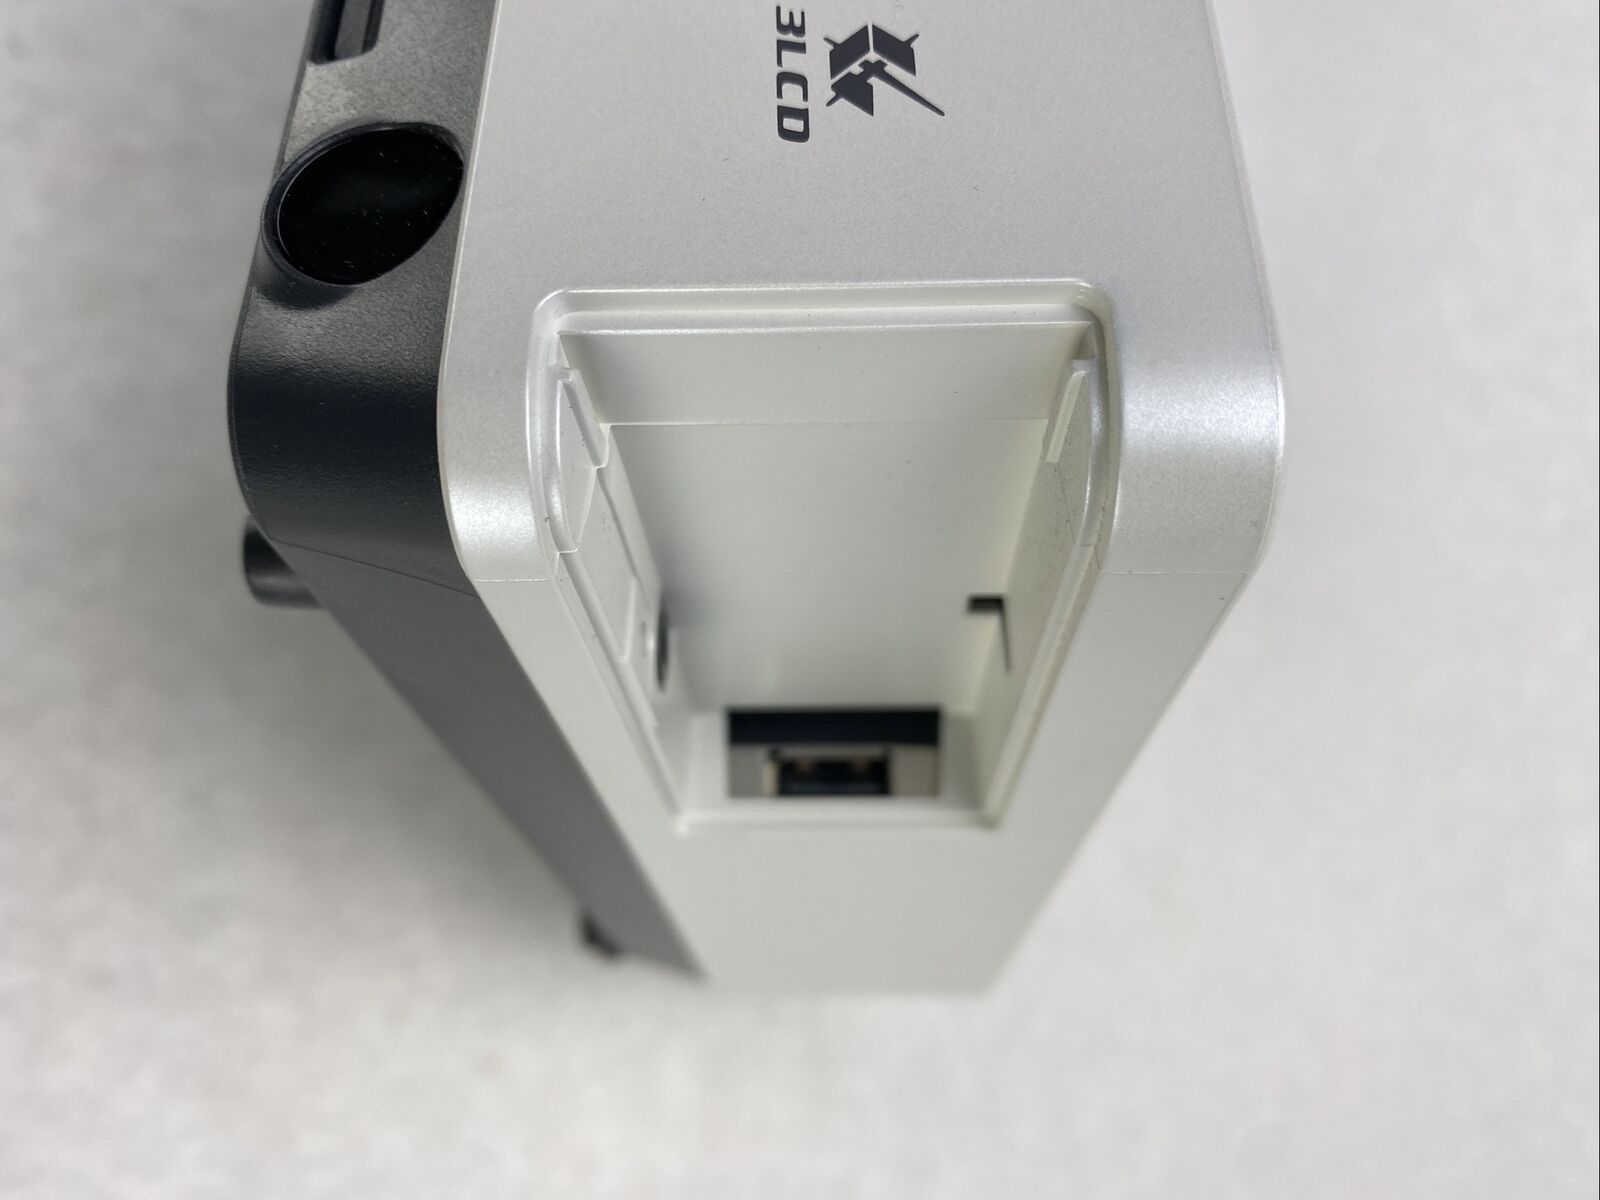 Epson PowerLite EMP-1705 3LCD Multimedia Projector BAD LAMP + Remote